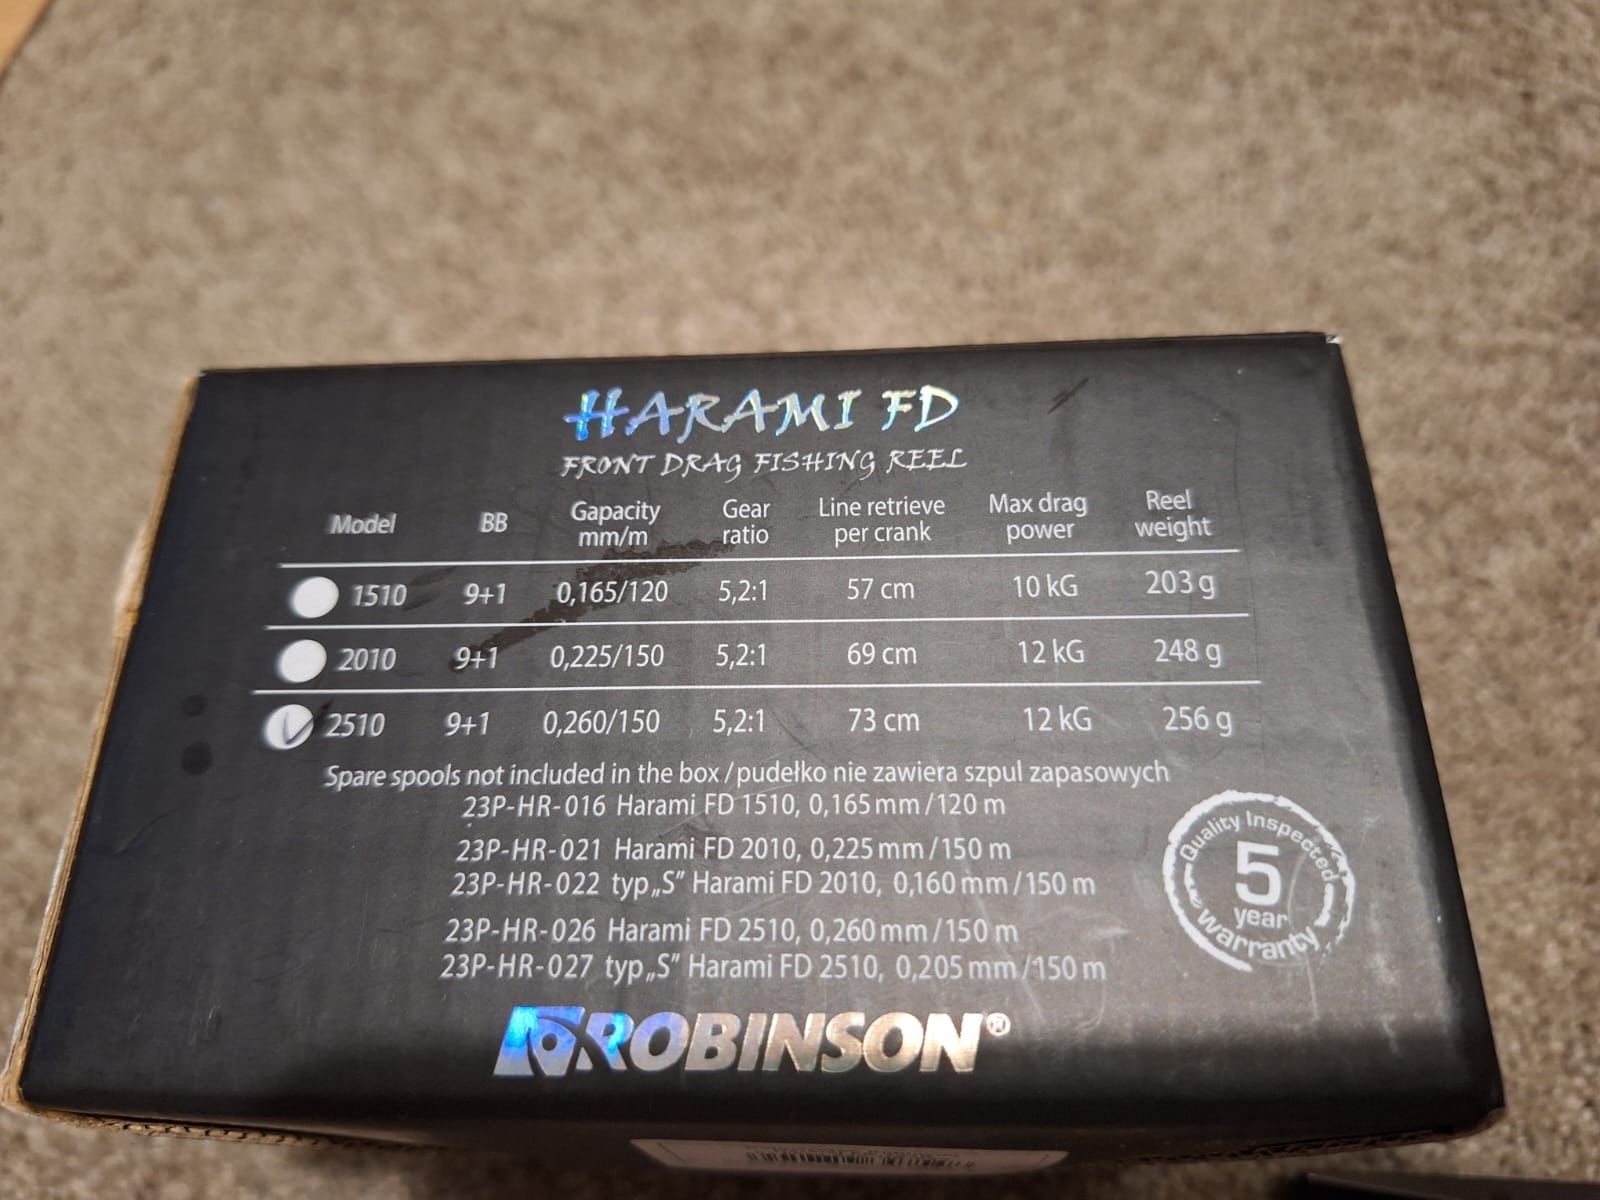 Robinson Harami FD 2510